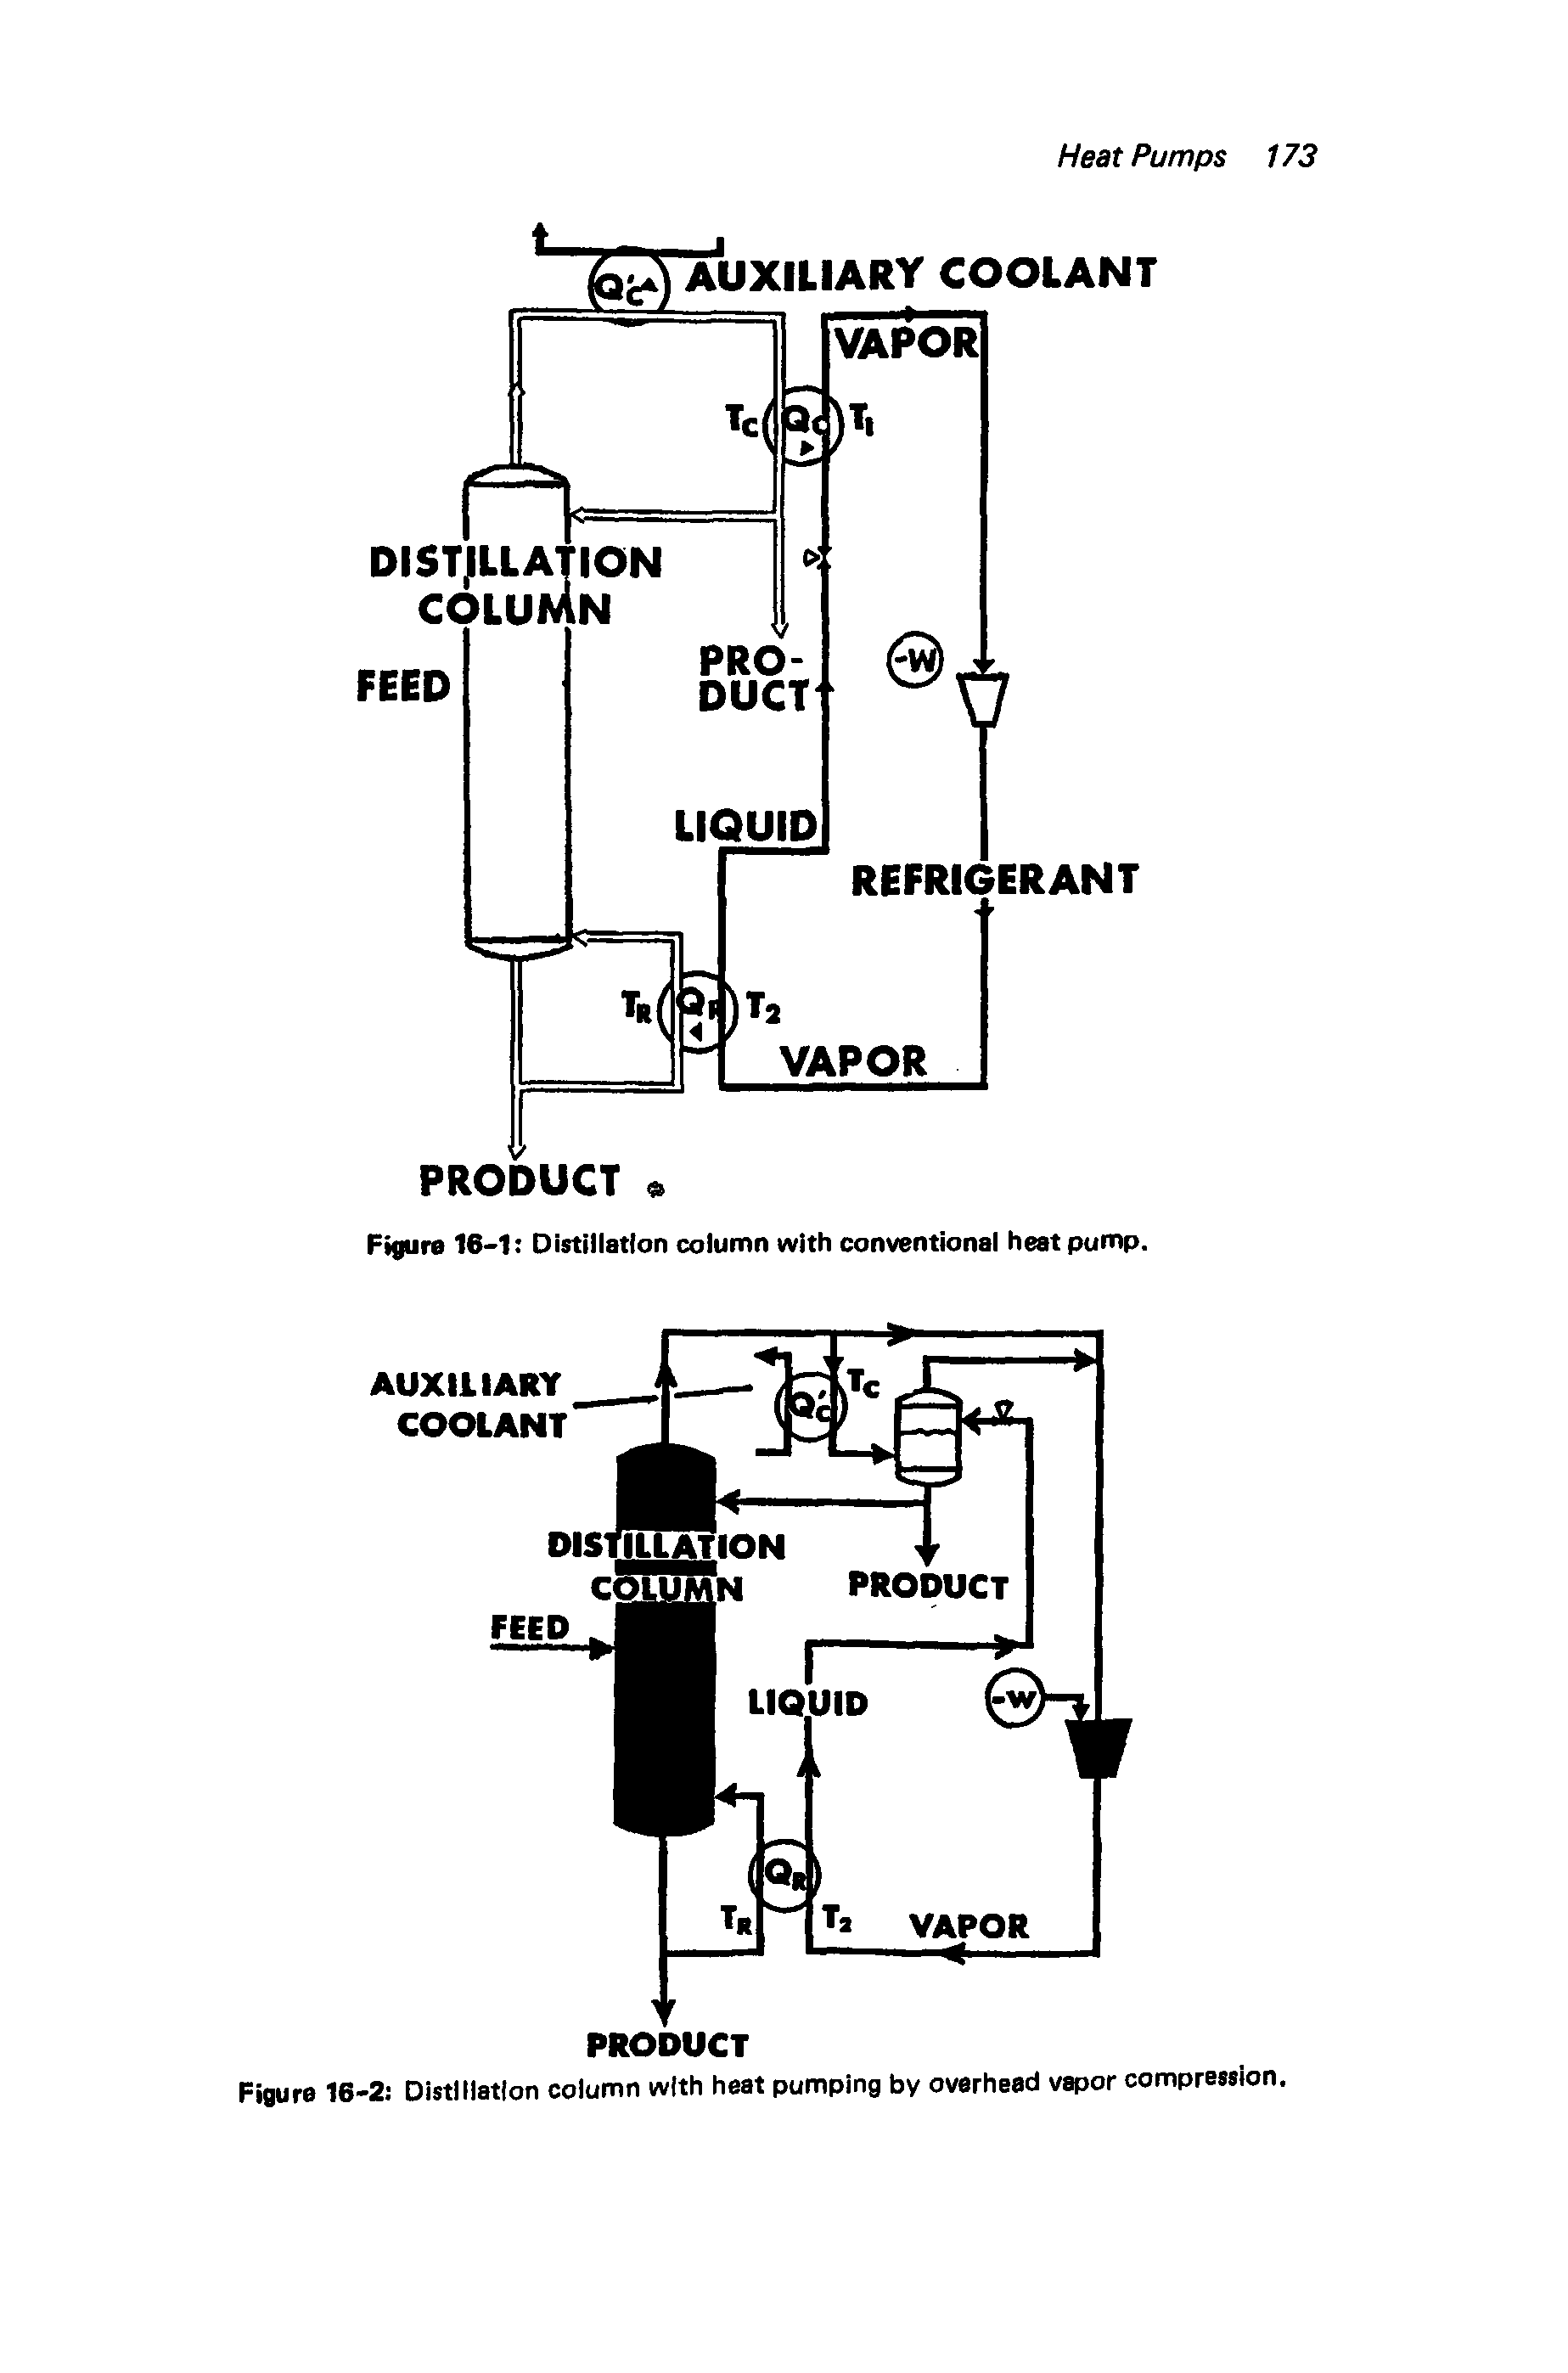 Figure 16-1 Distillation column with conventionai heat pump.